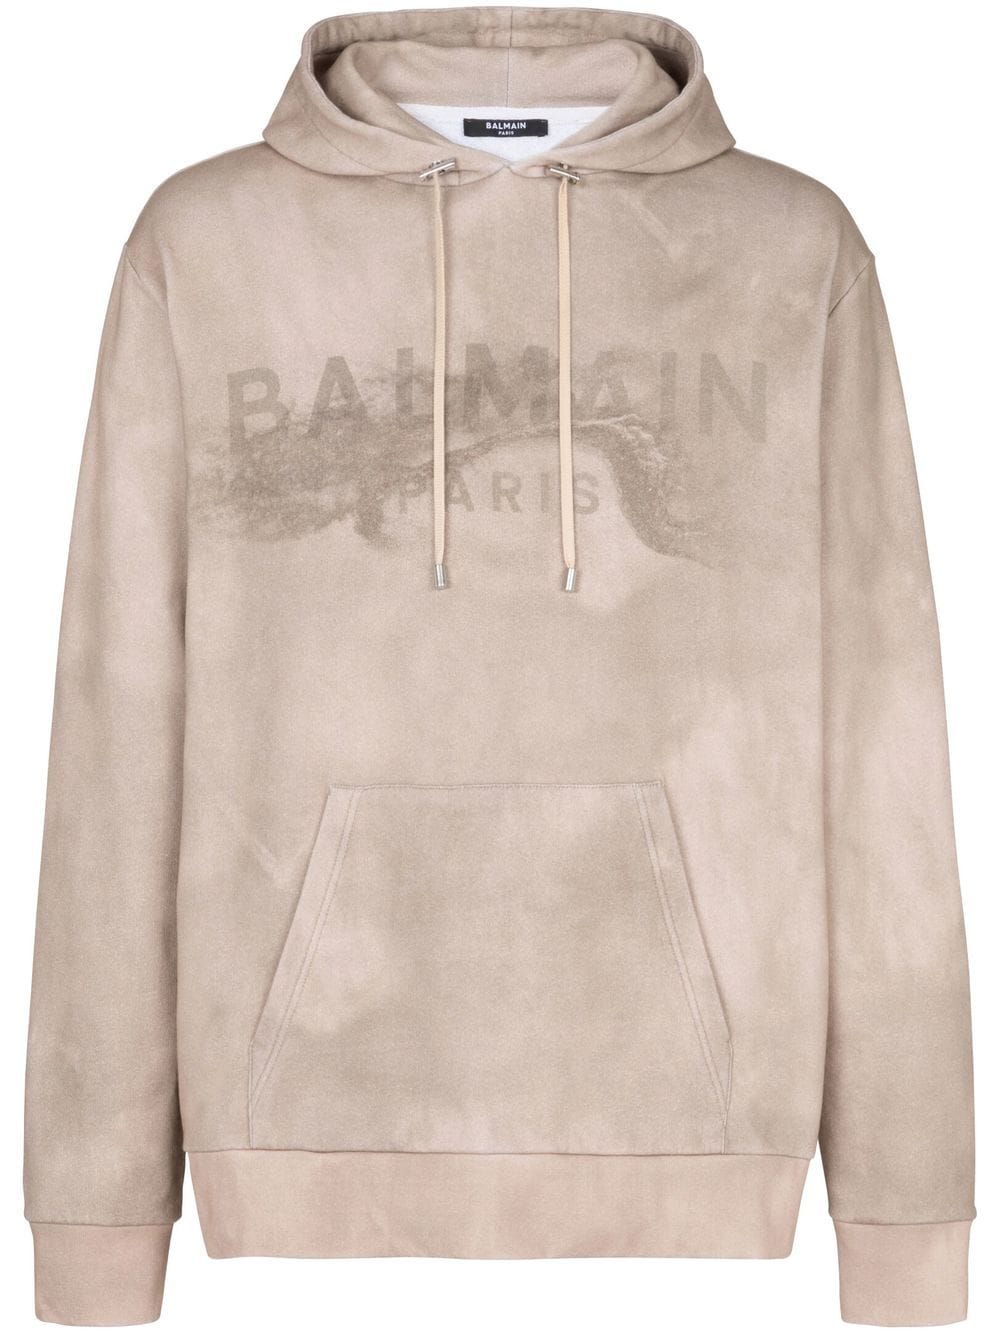 Balmain logo-print organic-cotton hoodie